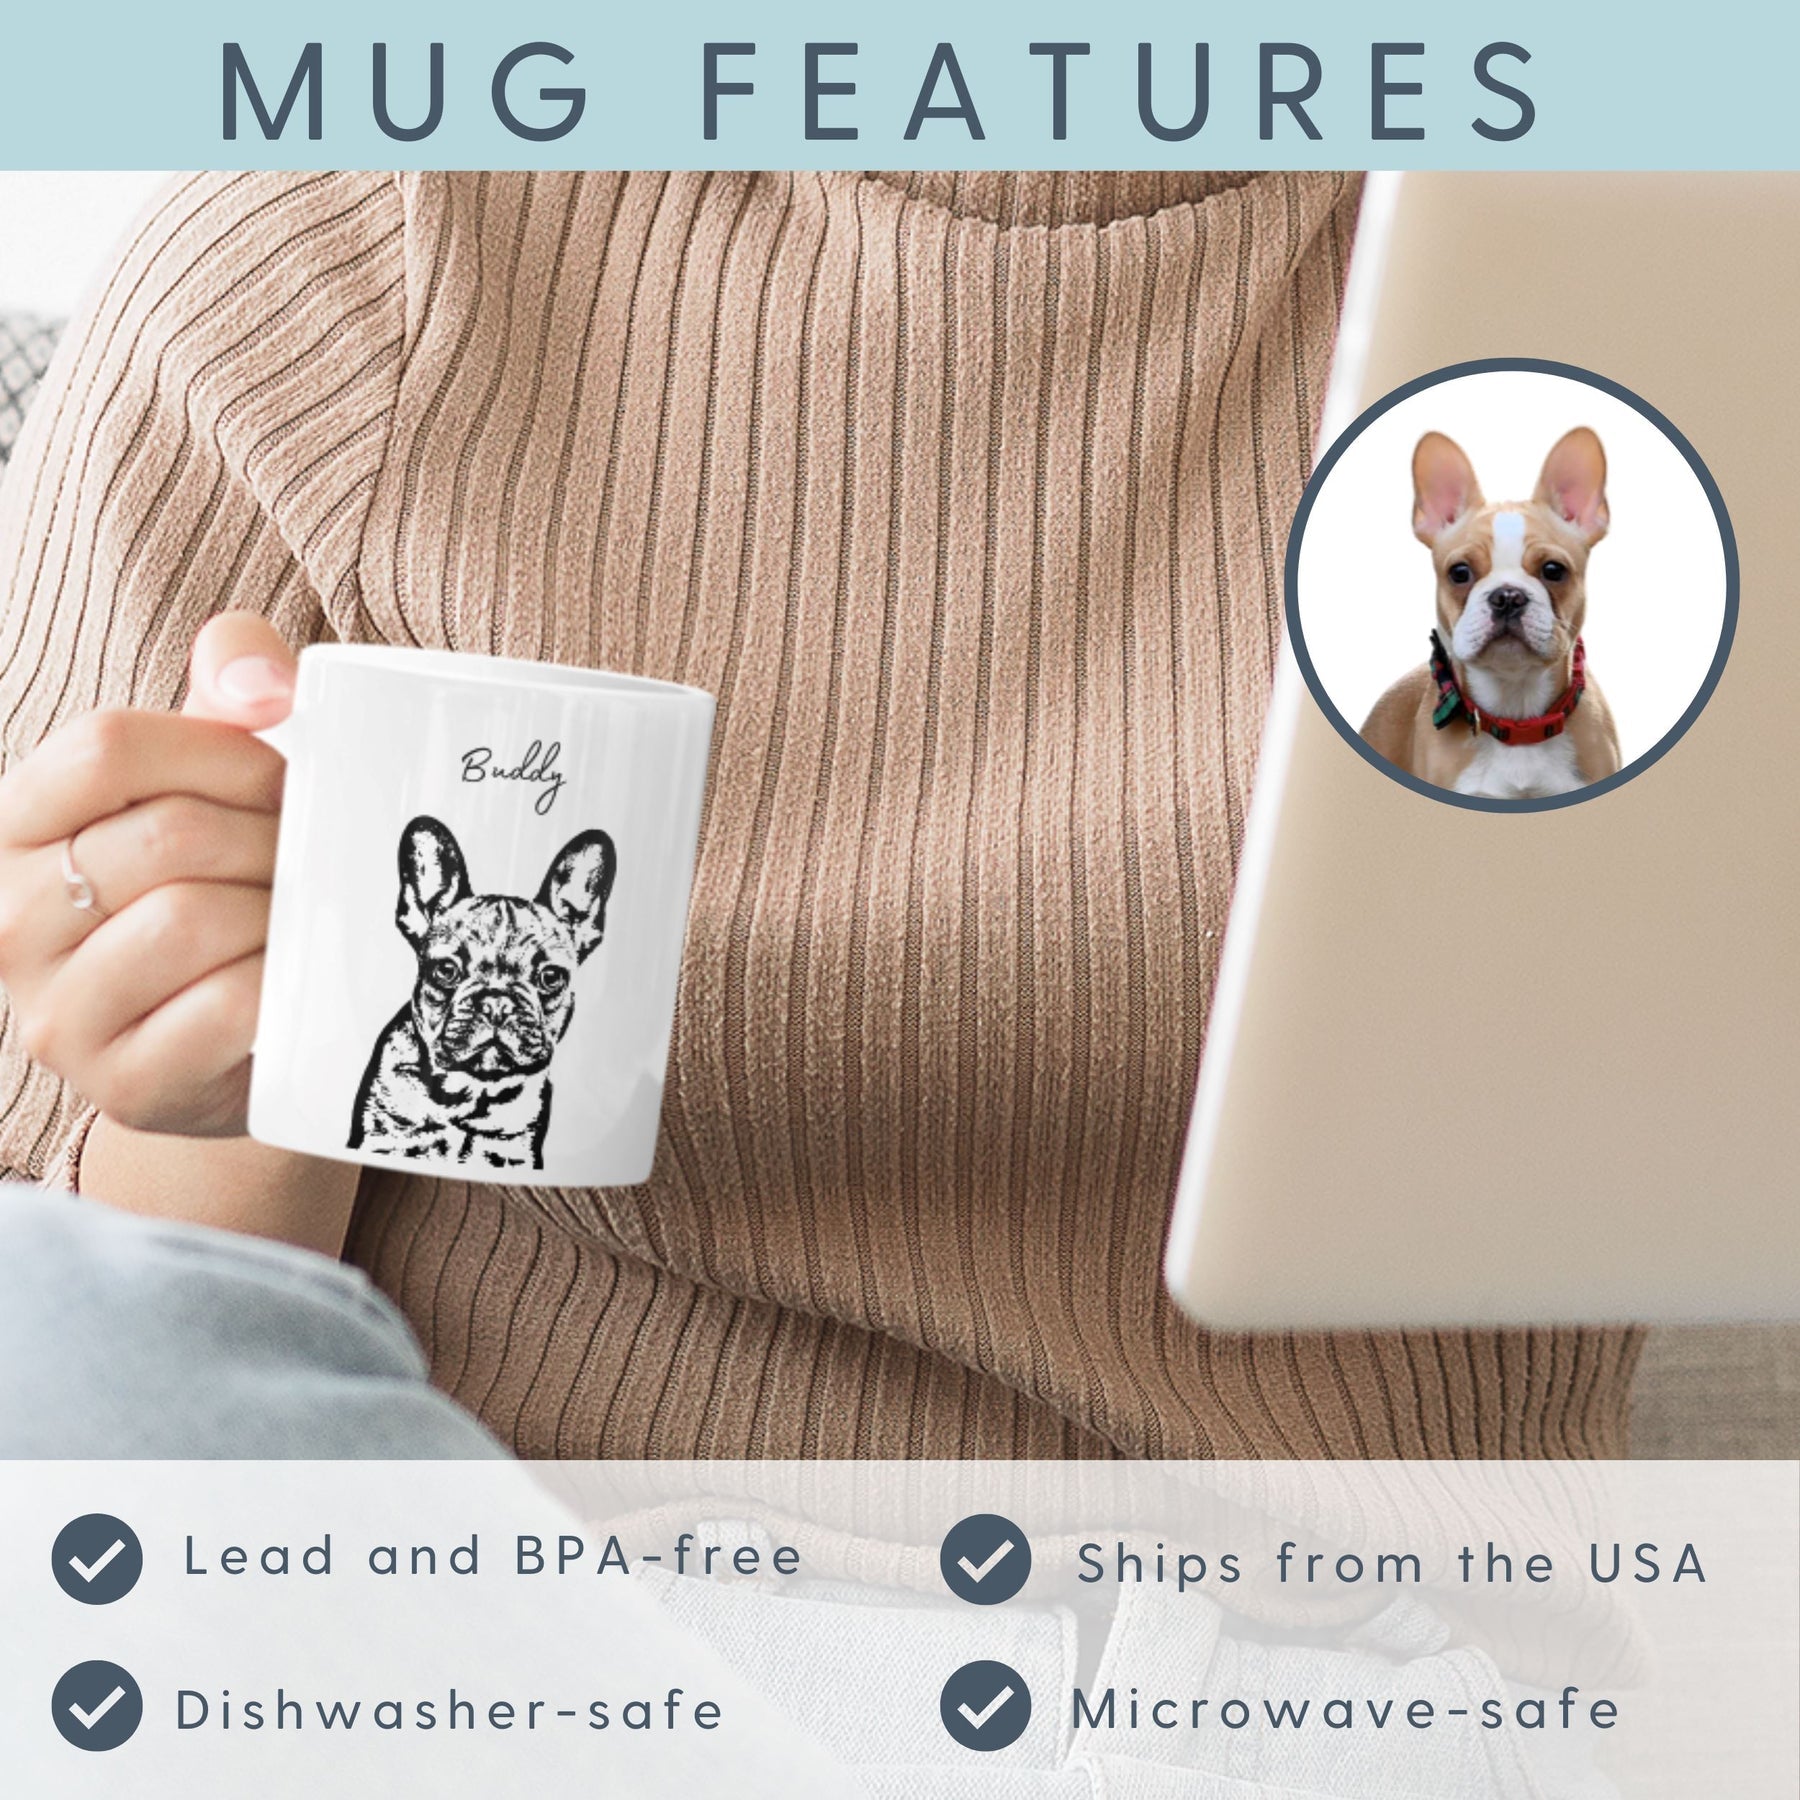 Personalized Custom Mug